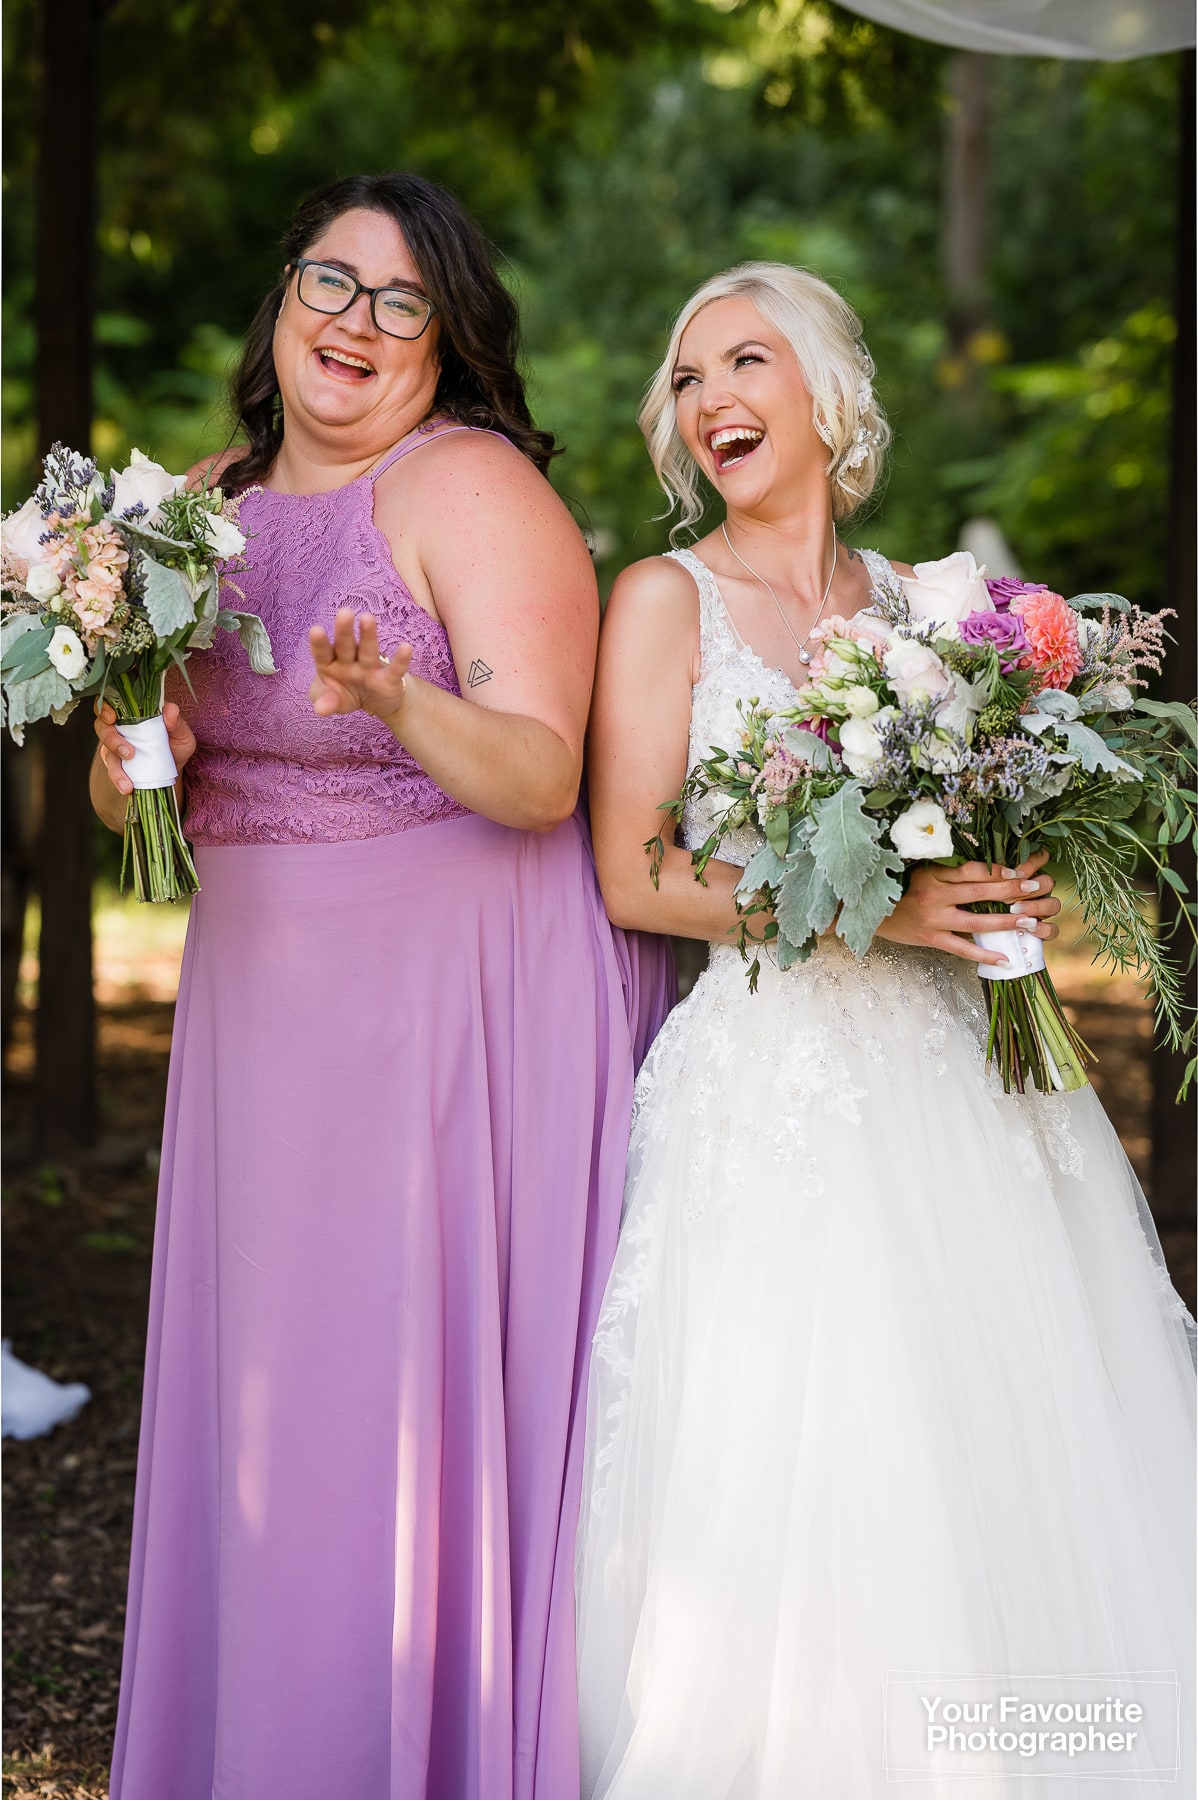 Bride and bridesmaid laughing